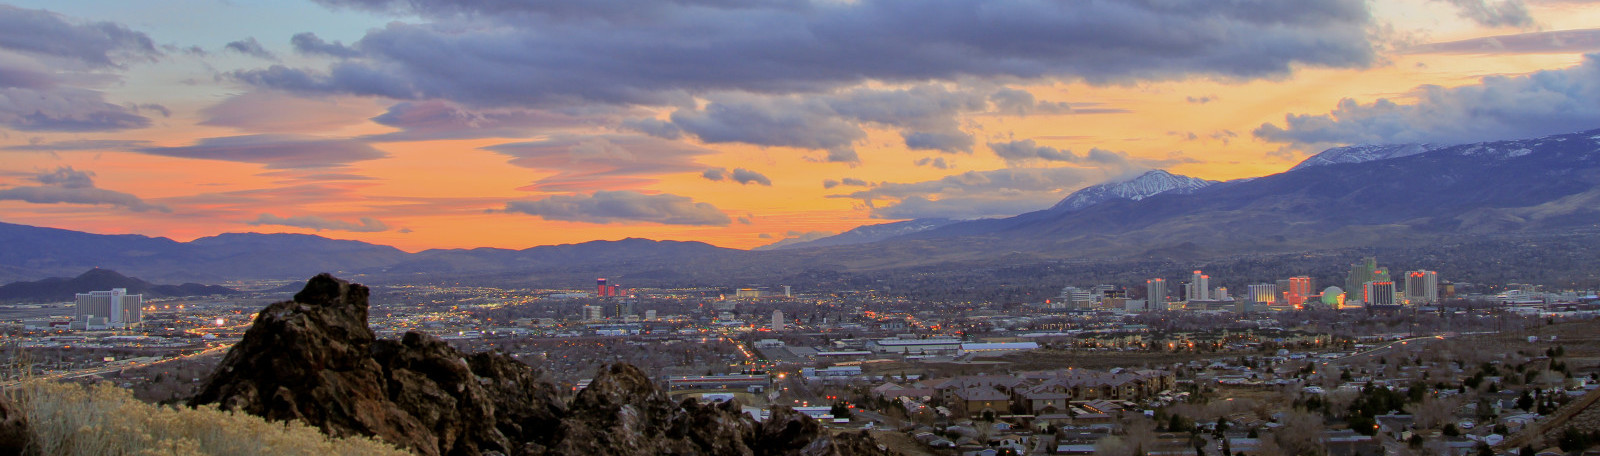 TMCC View of Reno Woo